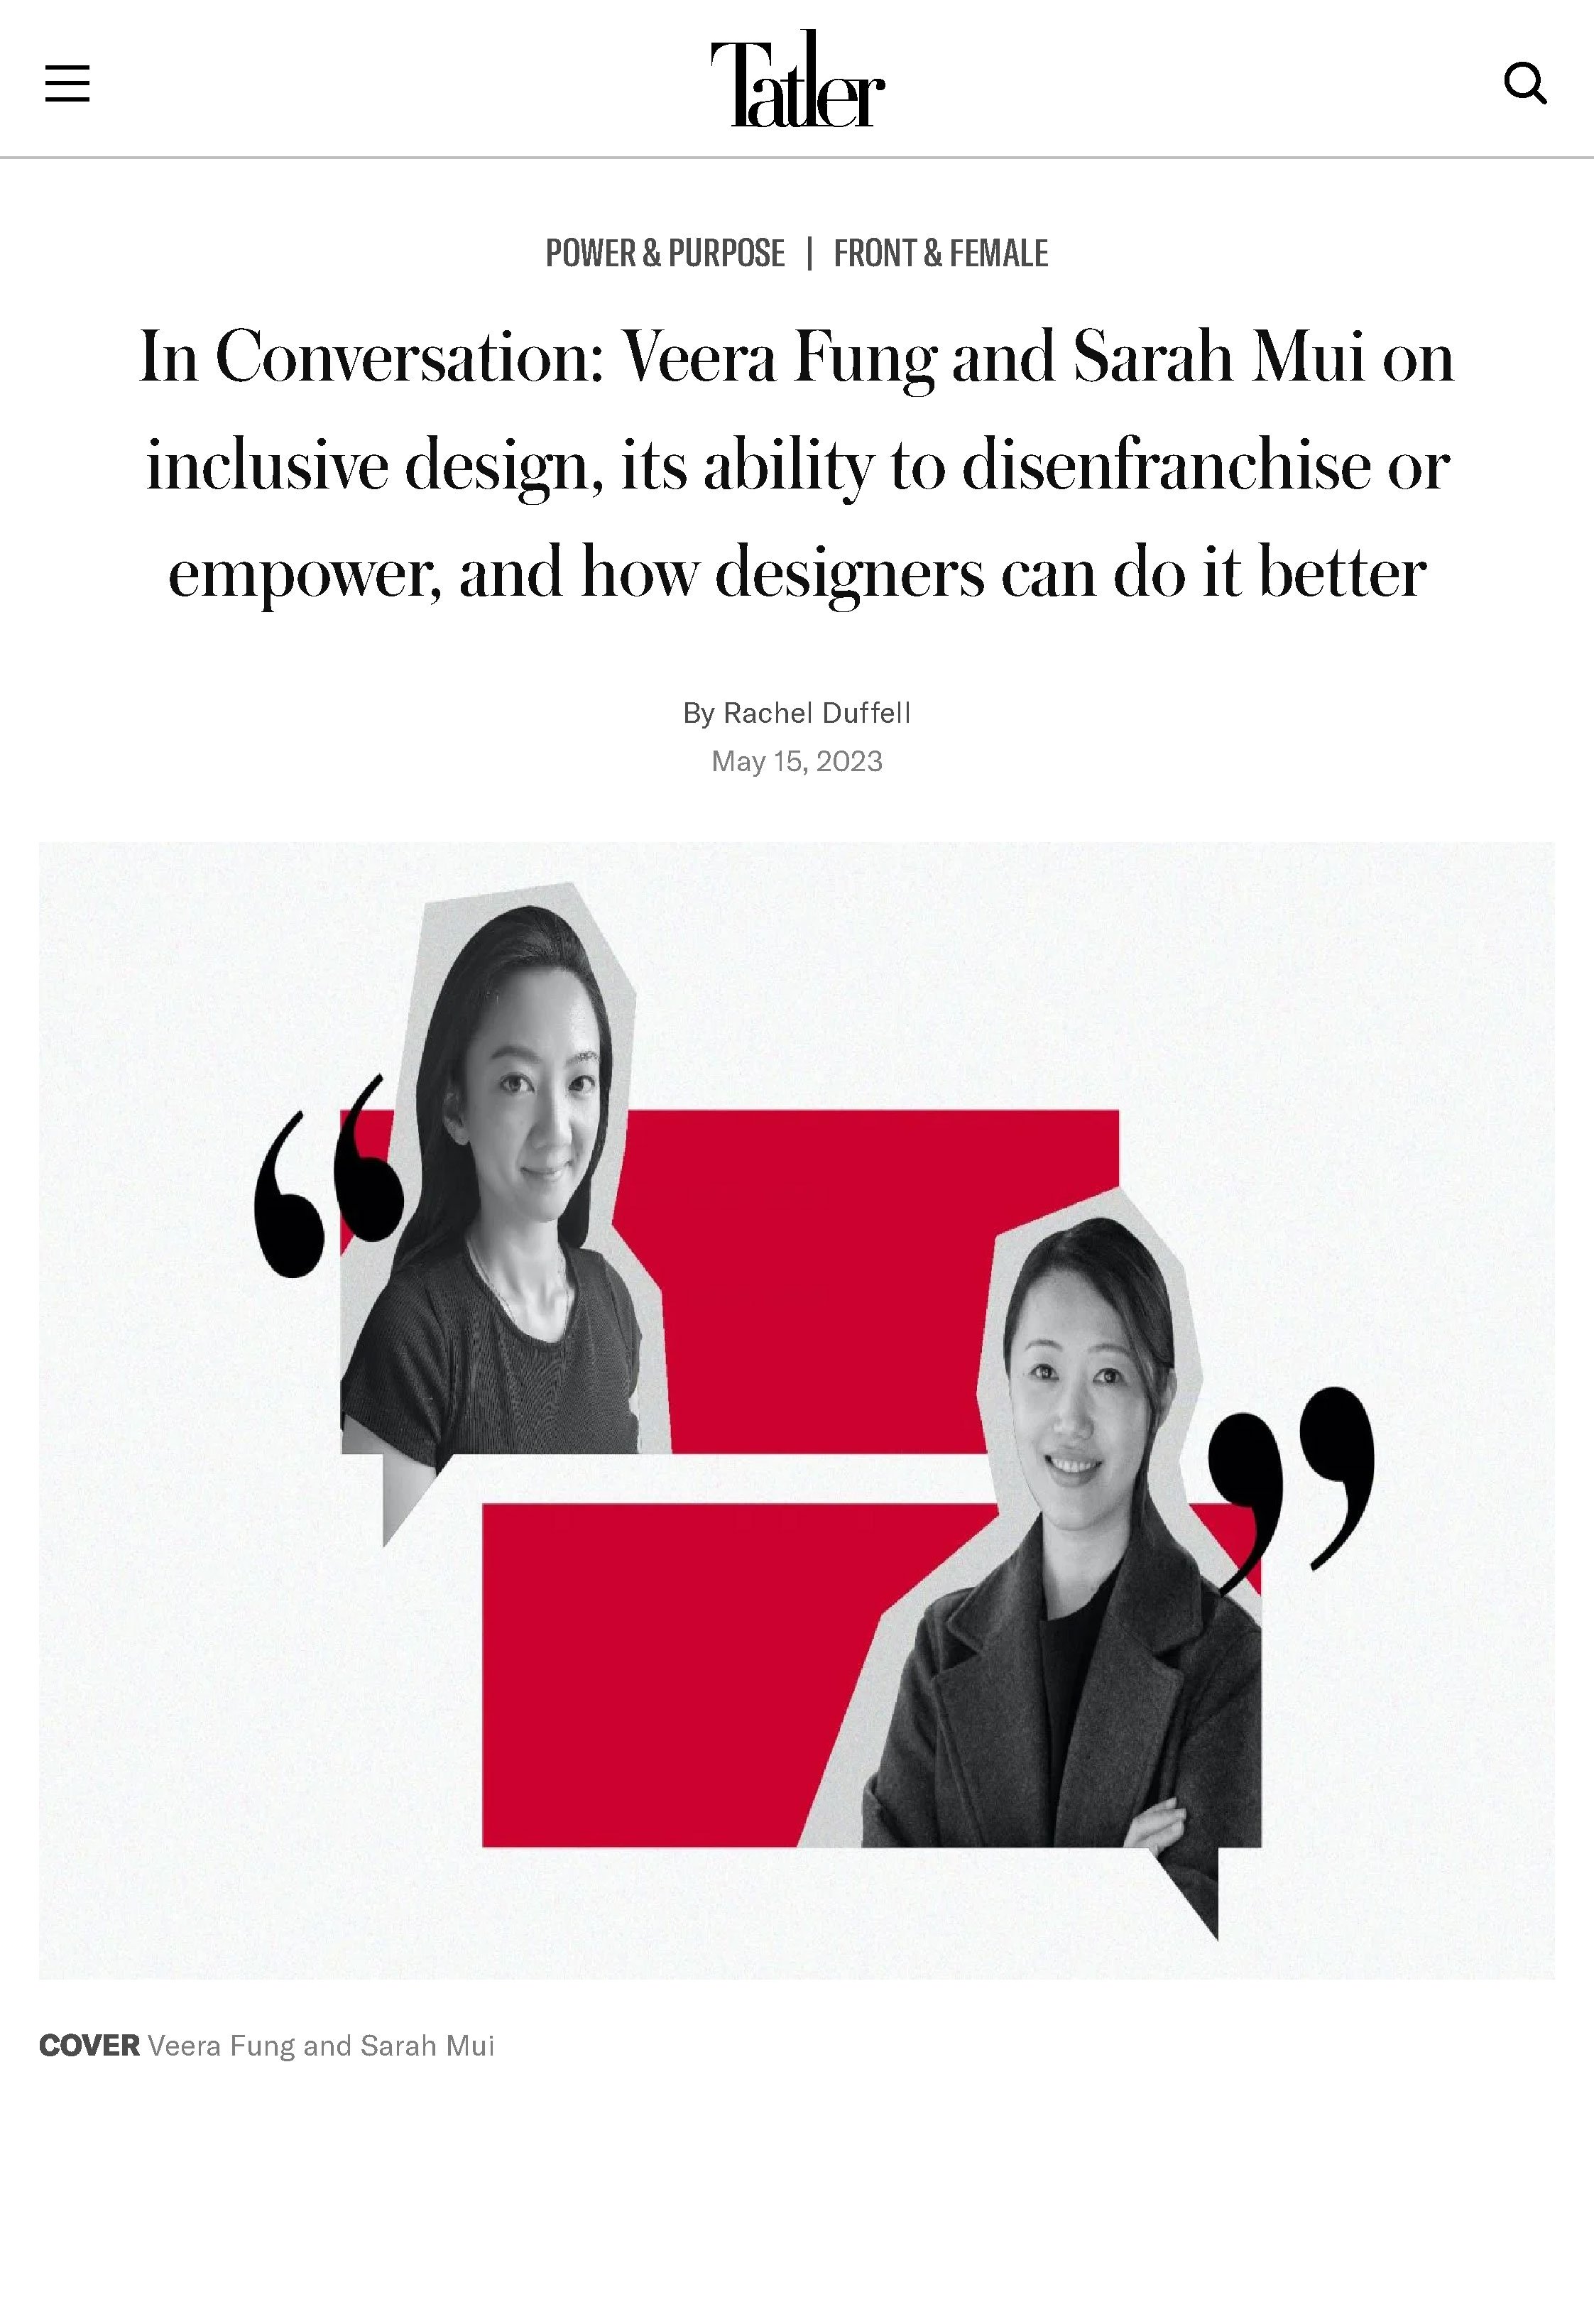 Veera-Fung-and-Sarah-Mui-on-the-power-of-inclusive-design-_-Tatler-Asia-1.jpg